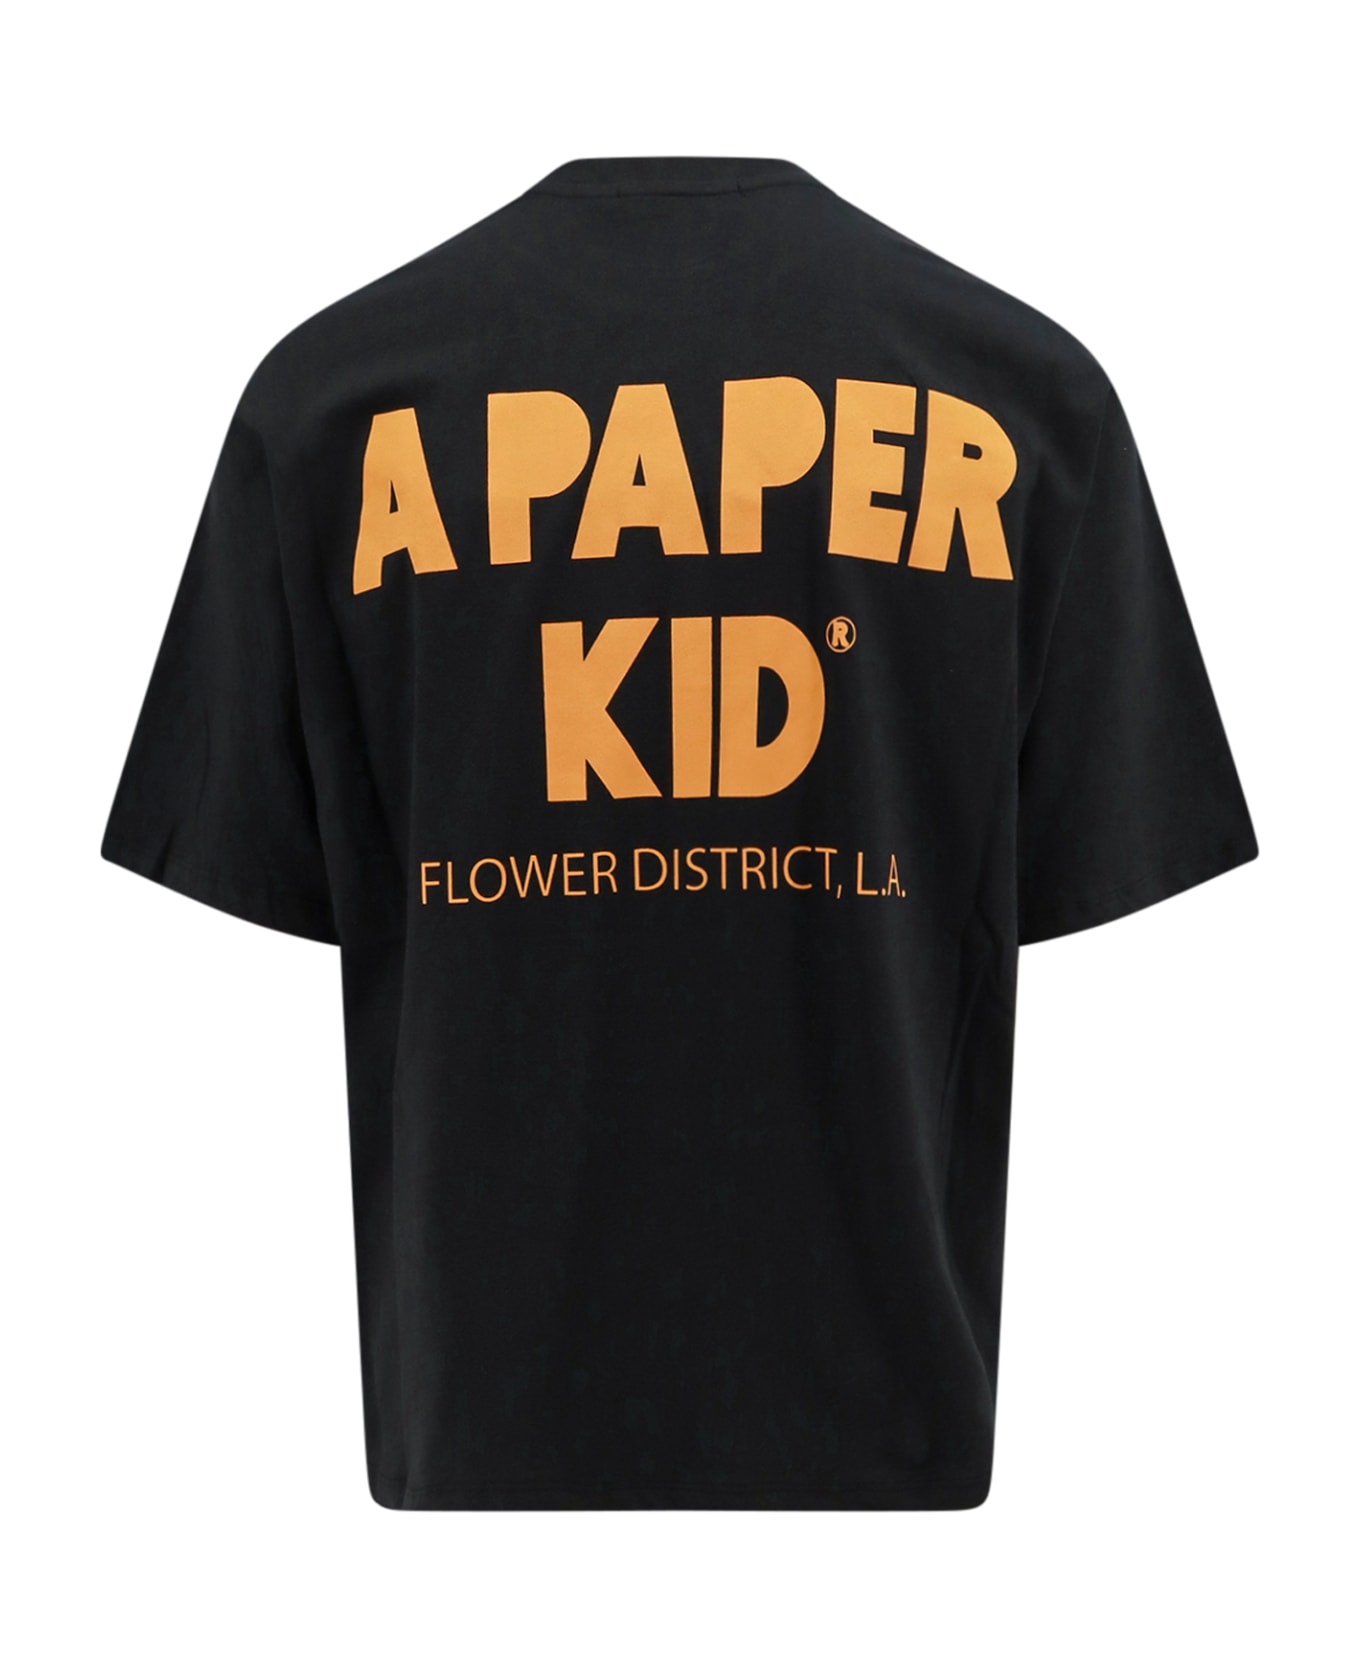 A Paper Kid T-shirt